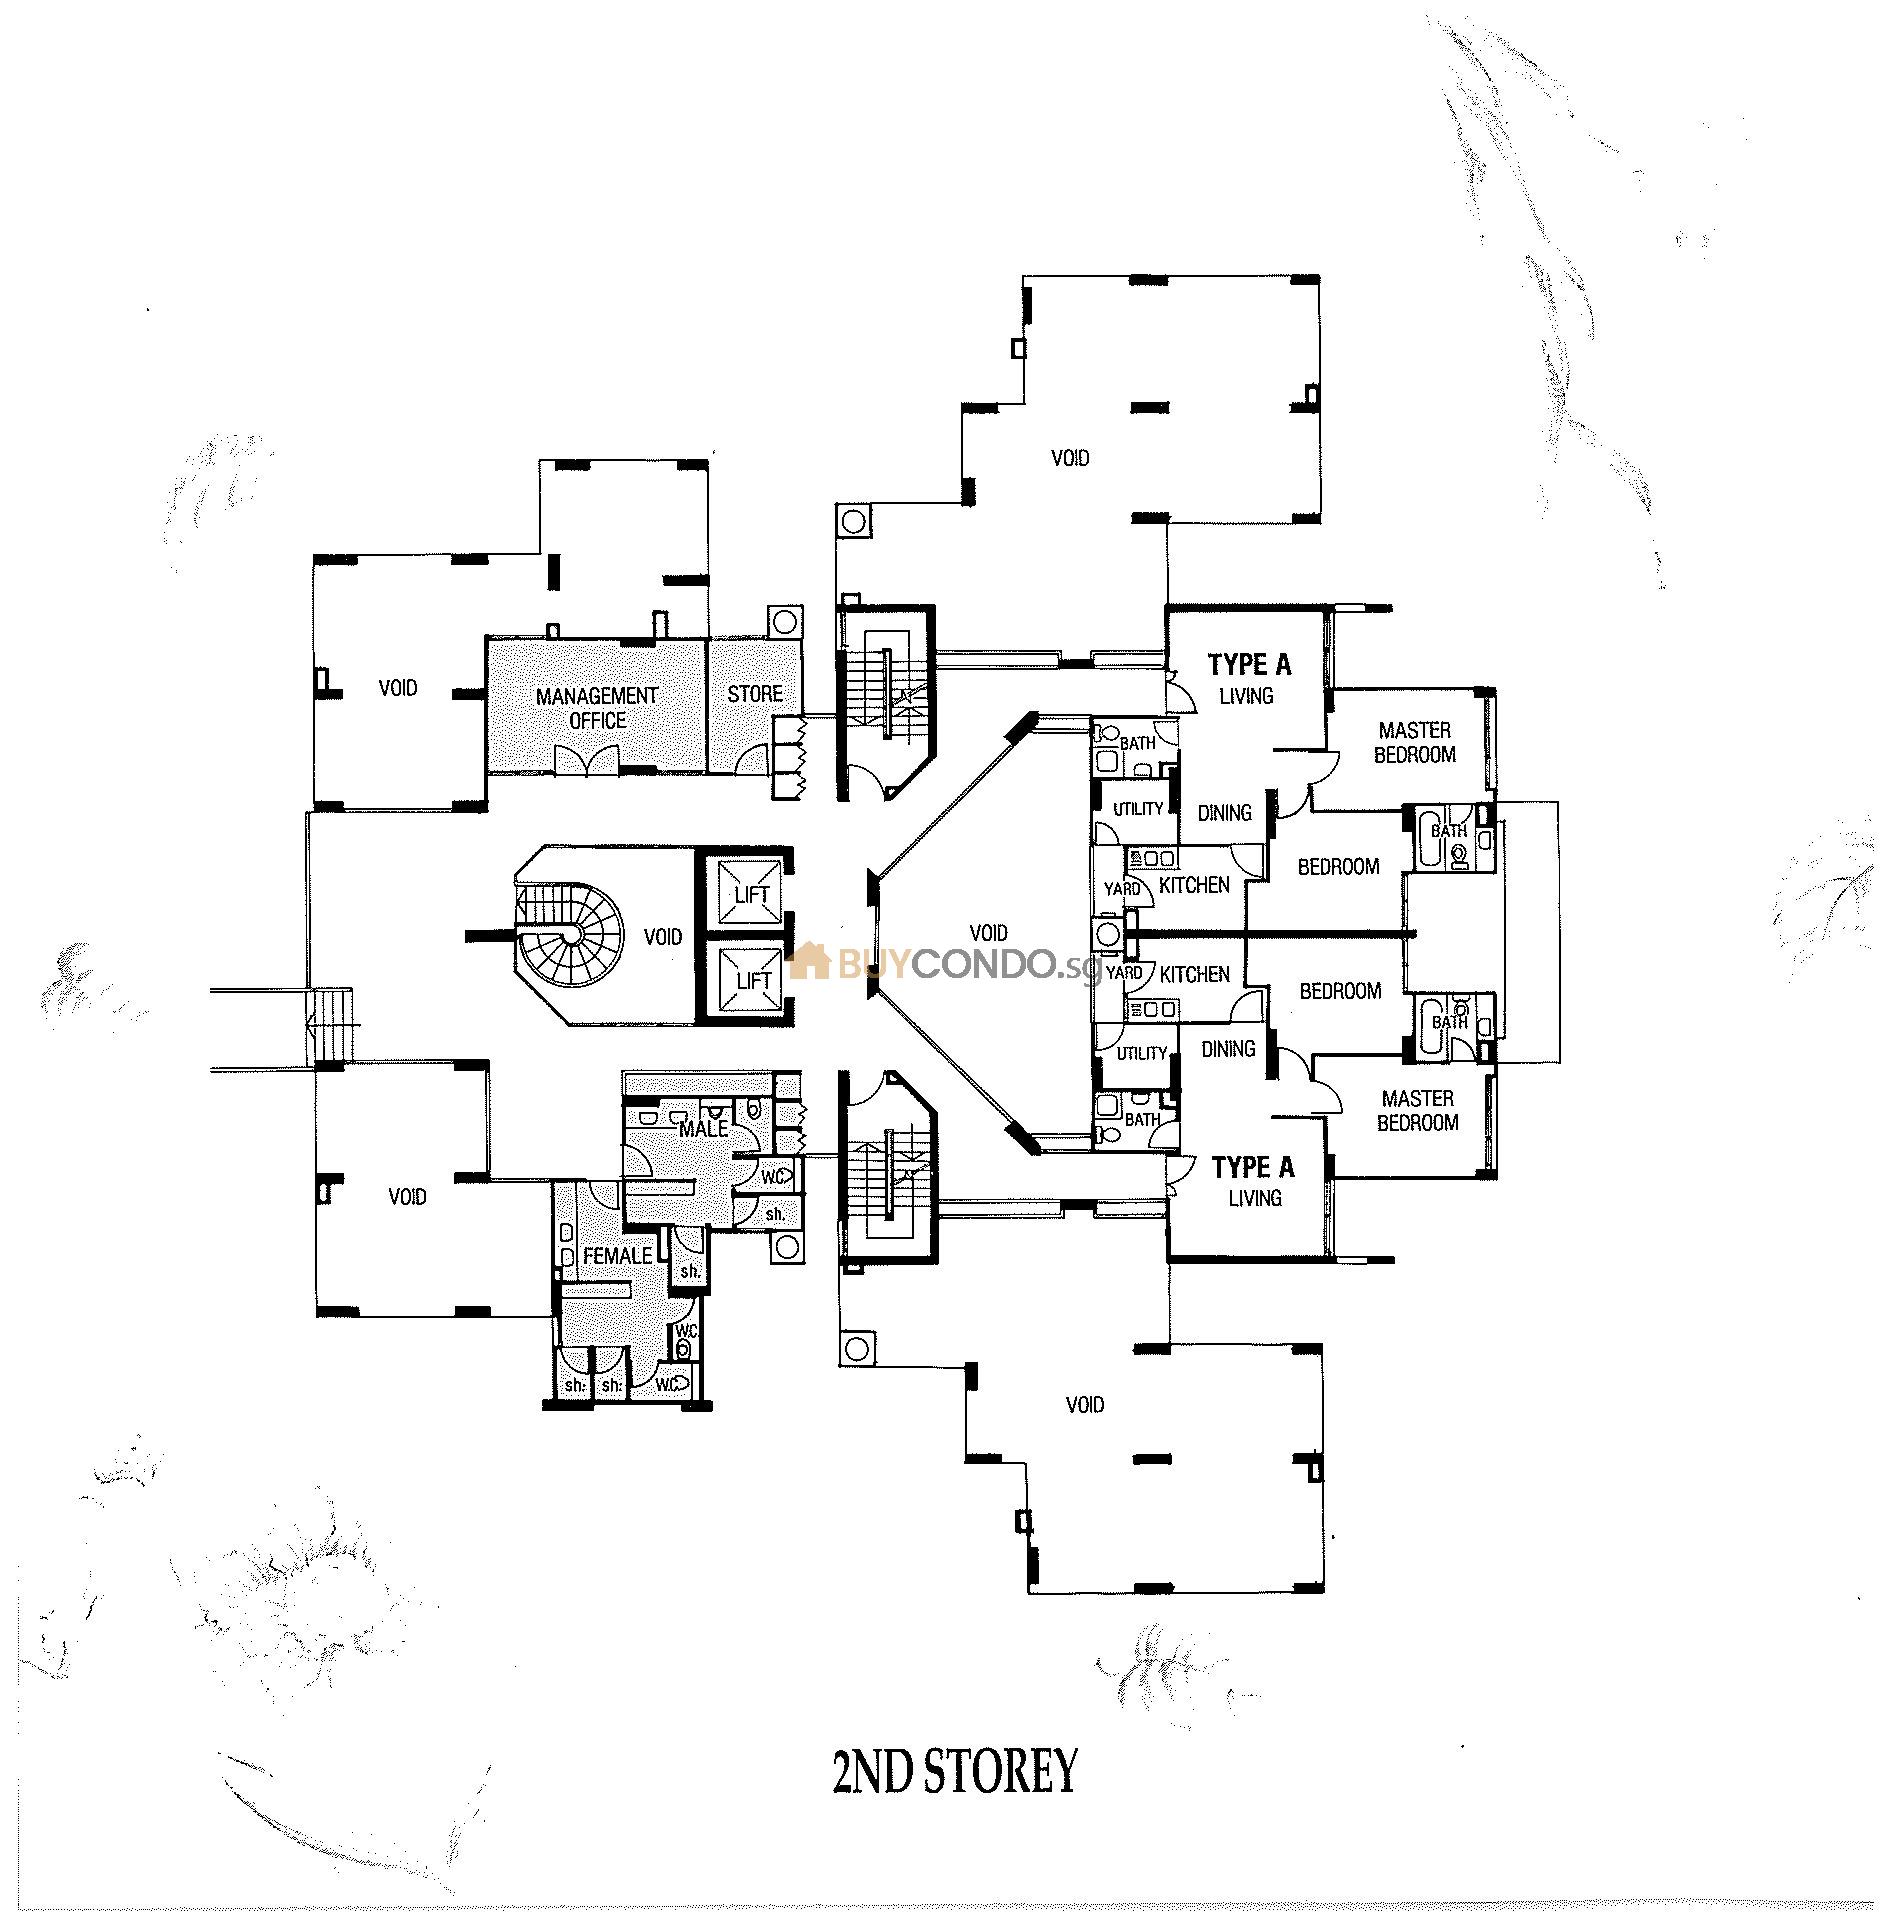 Marymount View Condominium Floor Plan